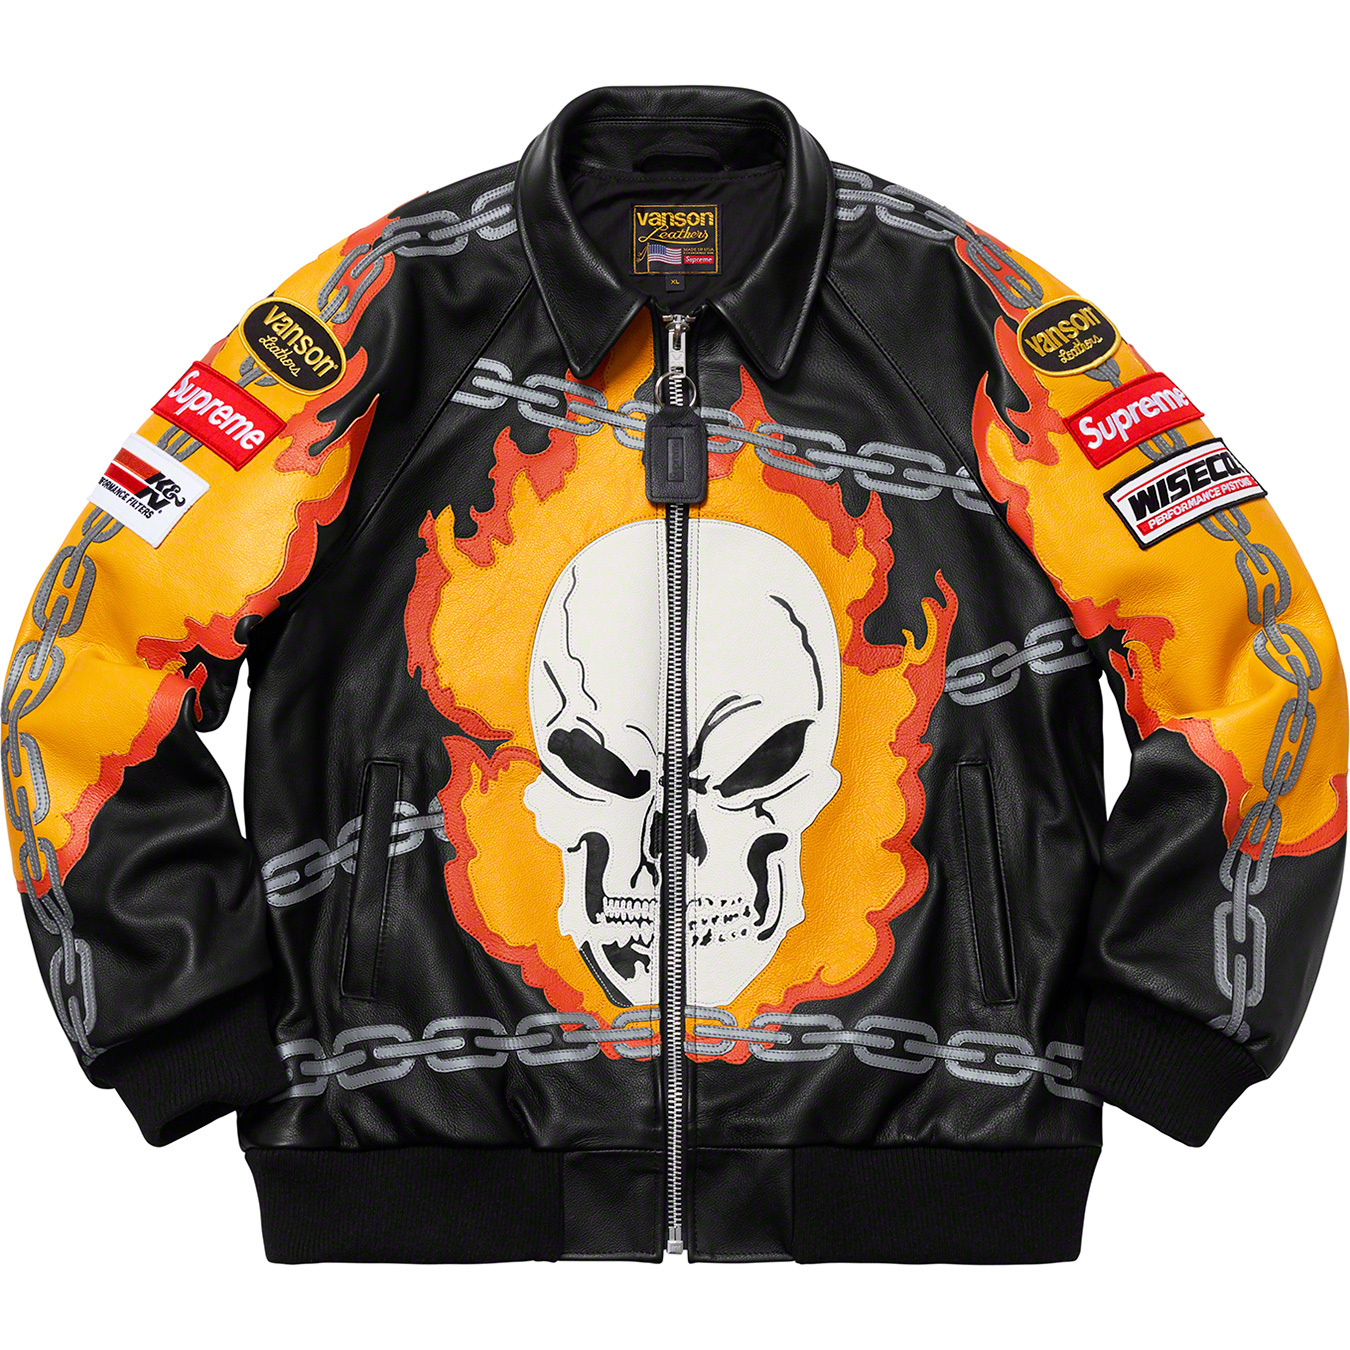 Details Supreme Supreme®/Vanson Leathers® Ghost Rider© Jacket - Supreme ...